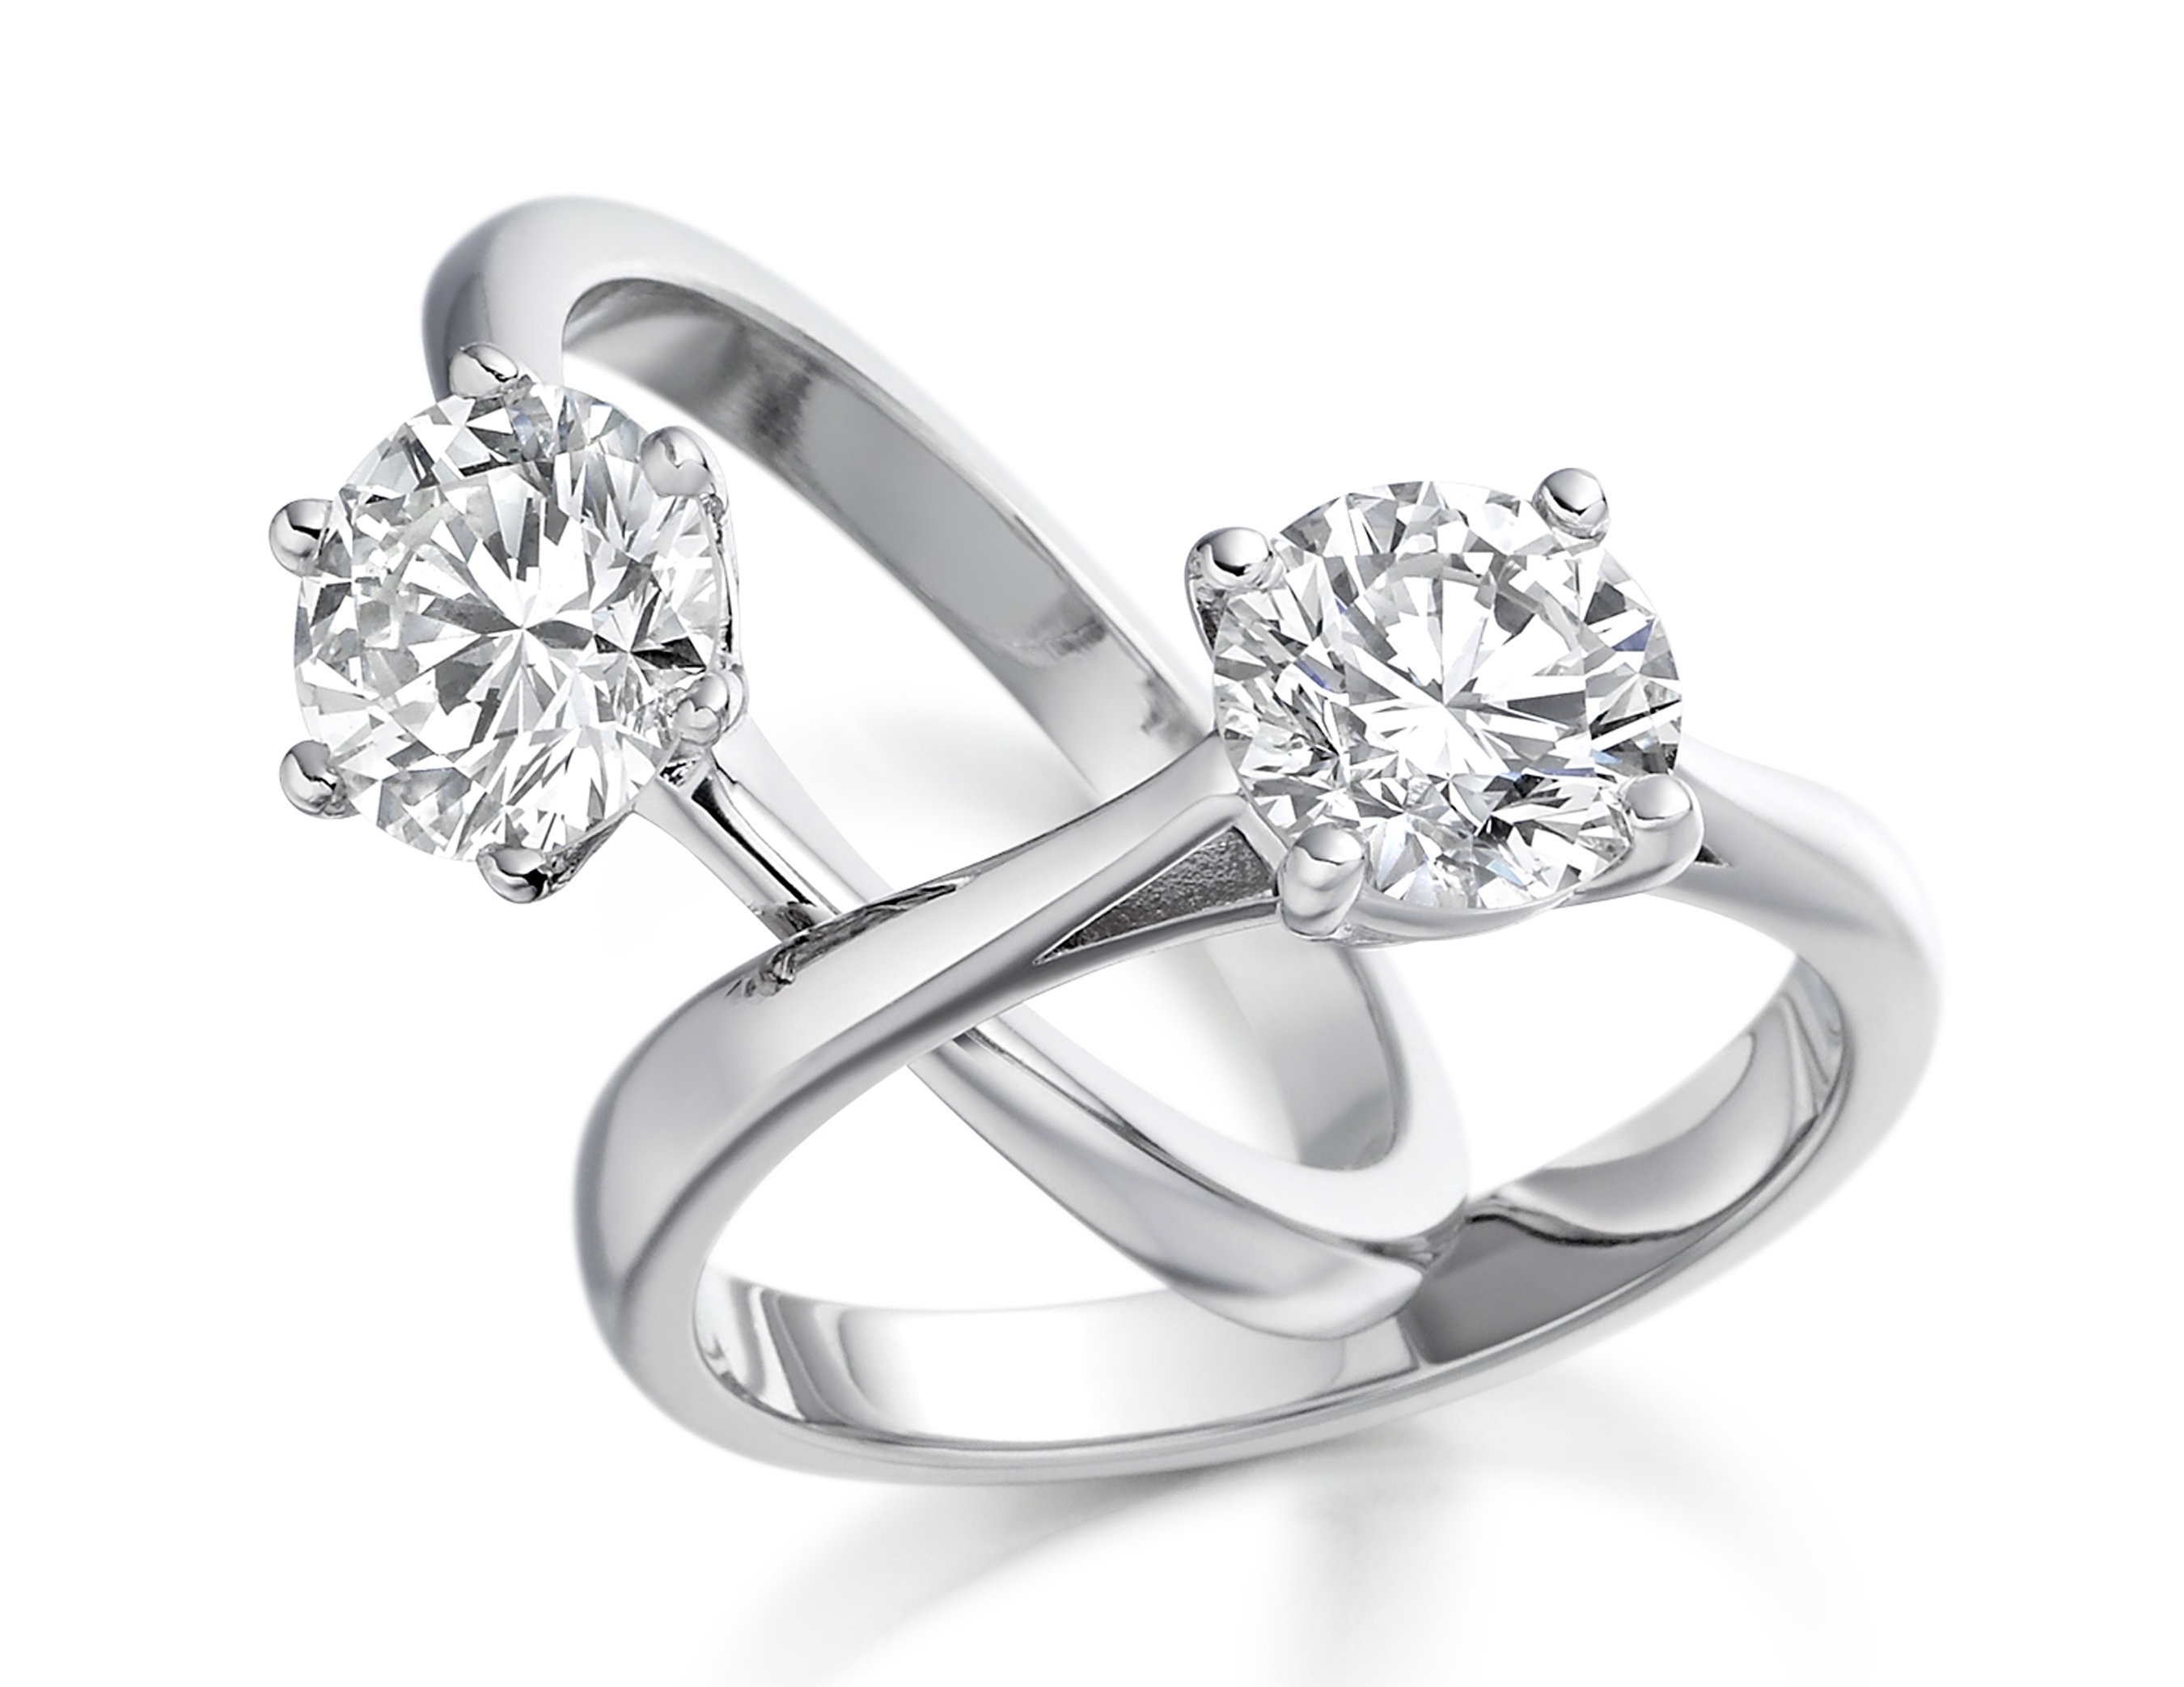 Daniel Christopher Jewellery Diamond Engagement Rings